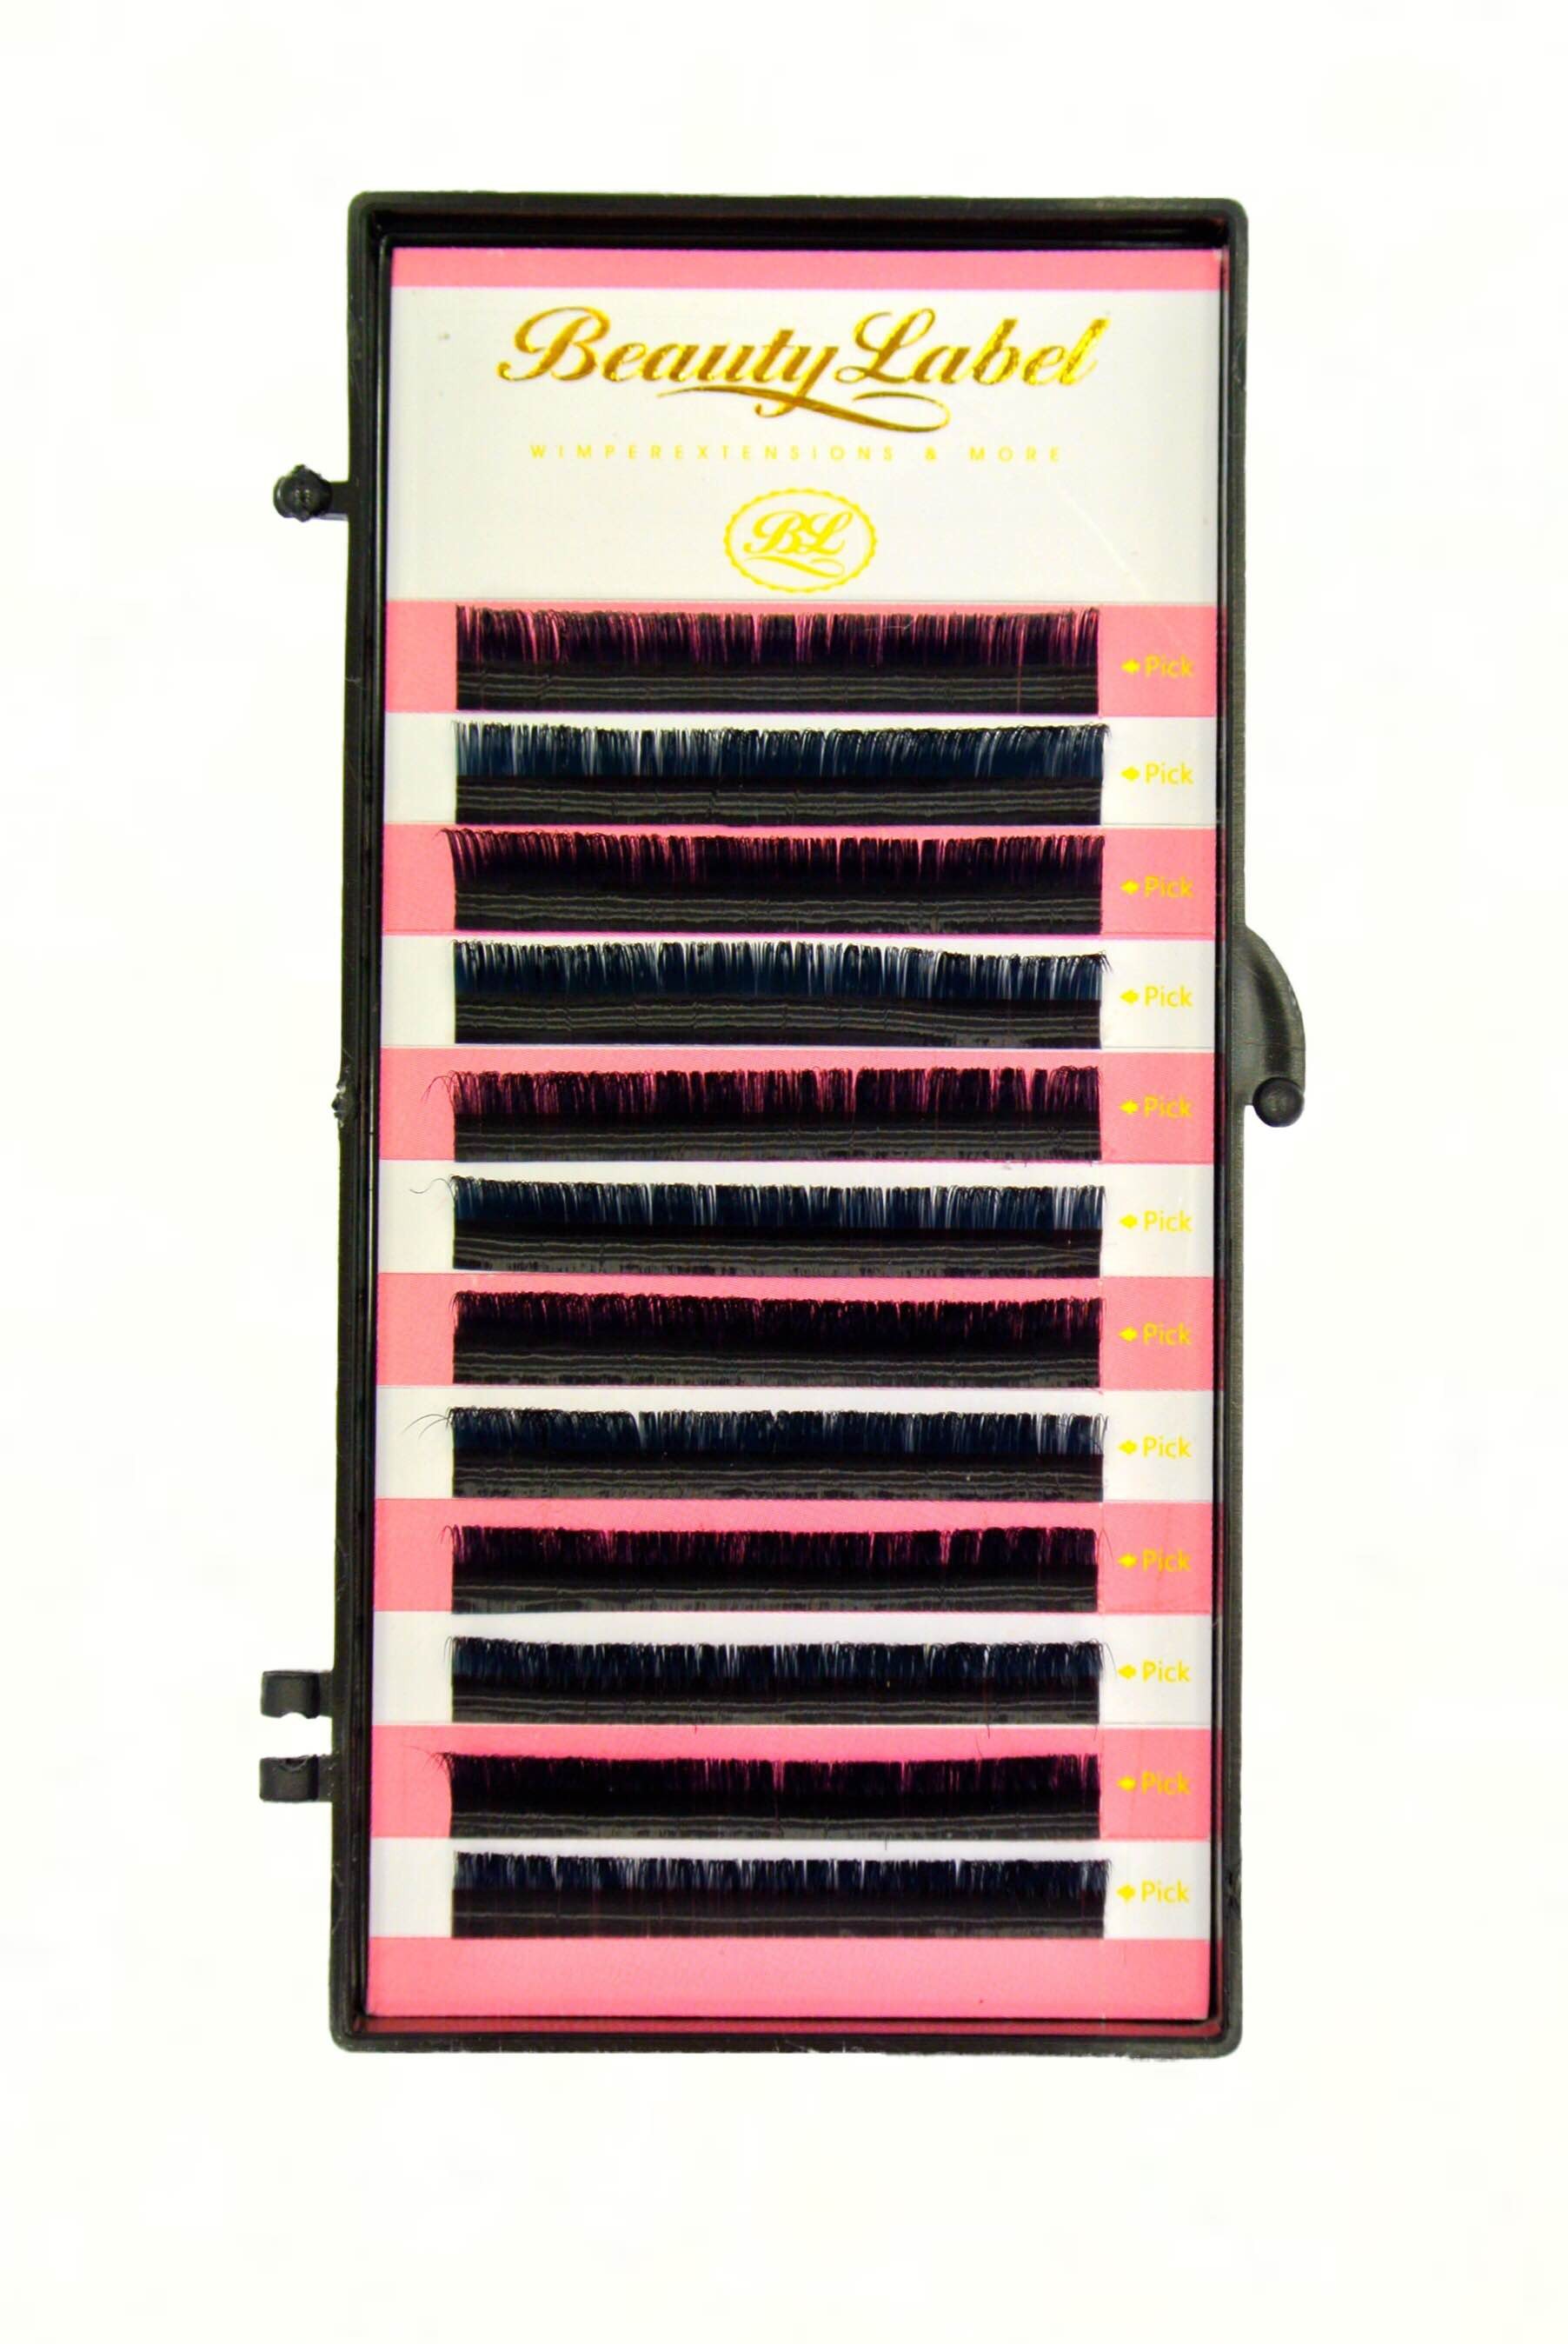 Beauty Label C+ krul soft silk super zachte volume wimpers voor de proffesionele wimperstyliste te gebruiken.